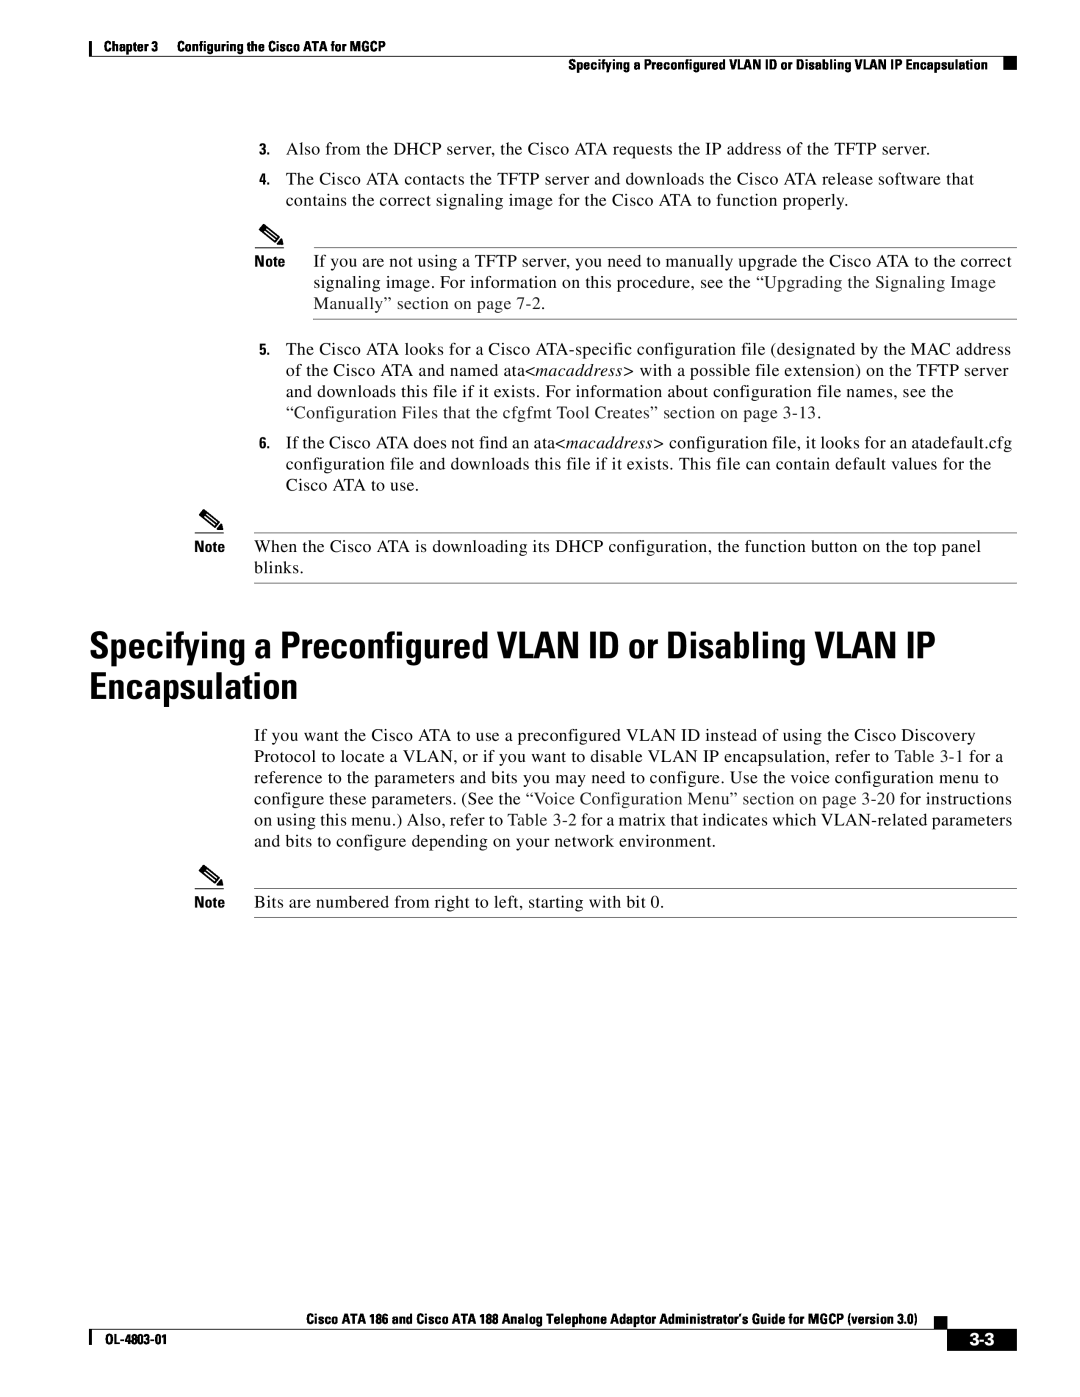 Cisco Systems ATA 188, ATA 186 manual Specifying a Preconfigured VLAN ID or Disabling VLAN IP Encapsulation 